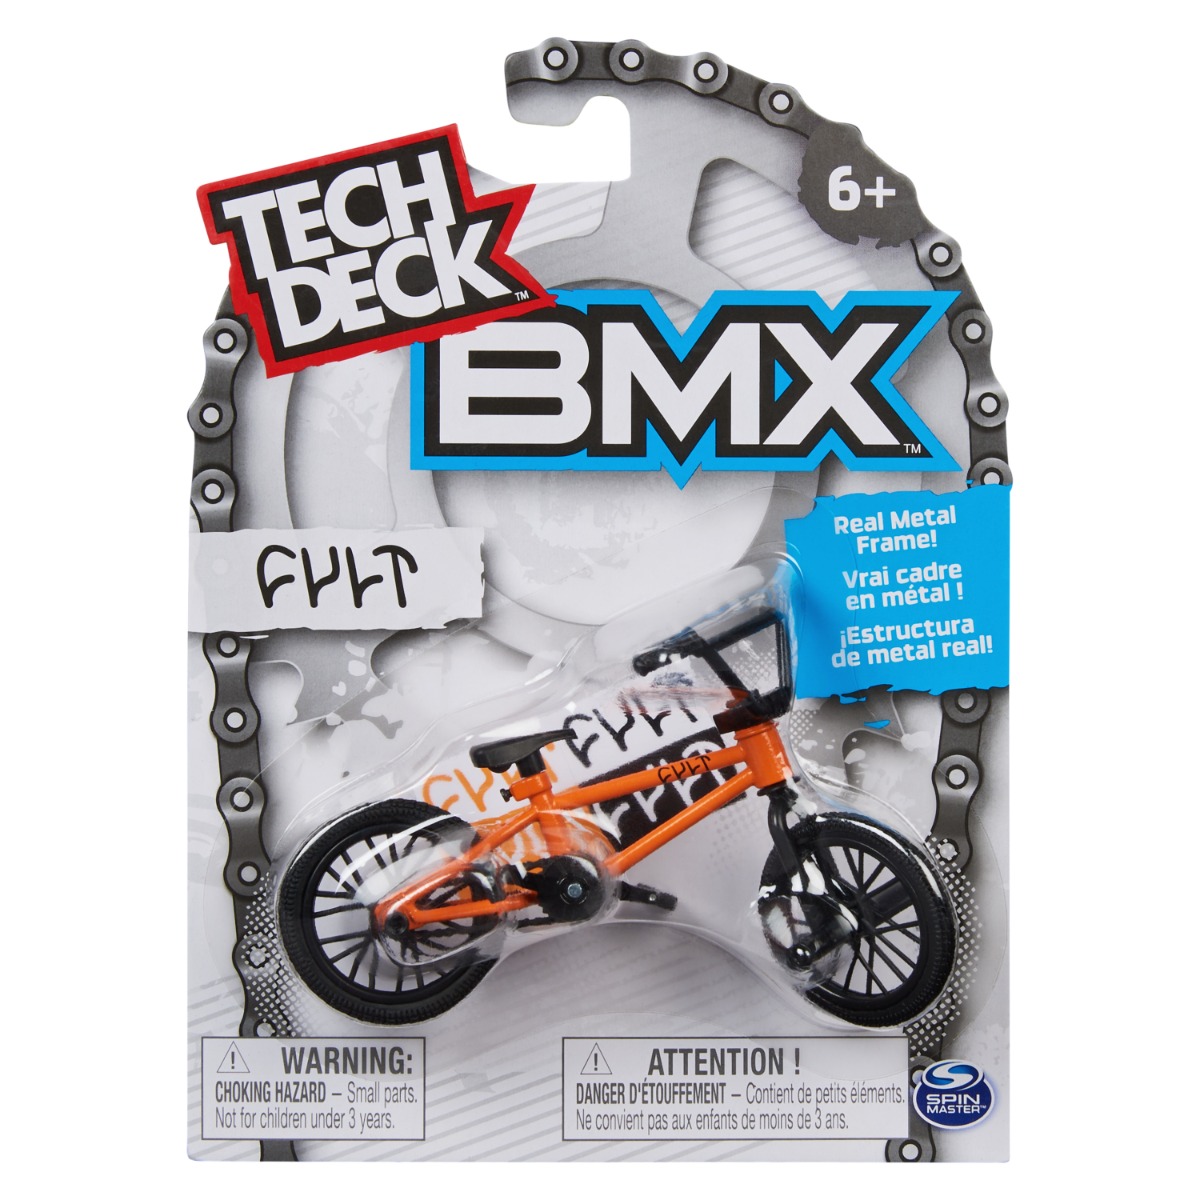 Mini BMX bike, Tech Deck, Cult, 20140828